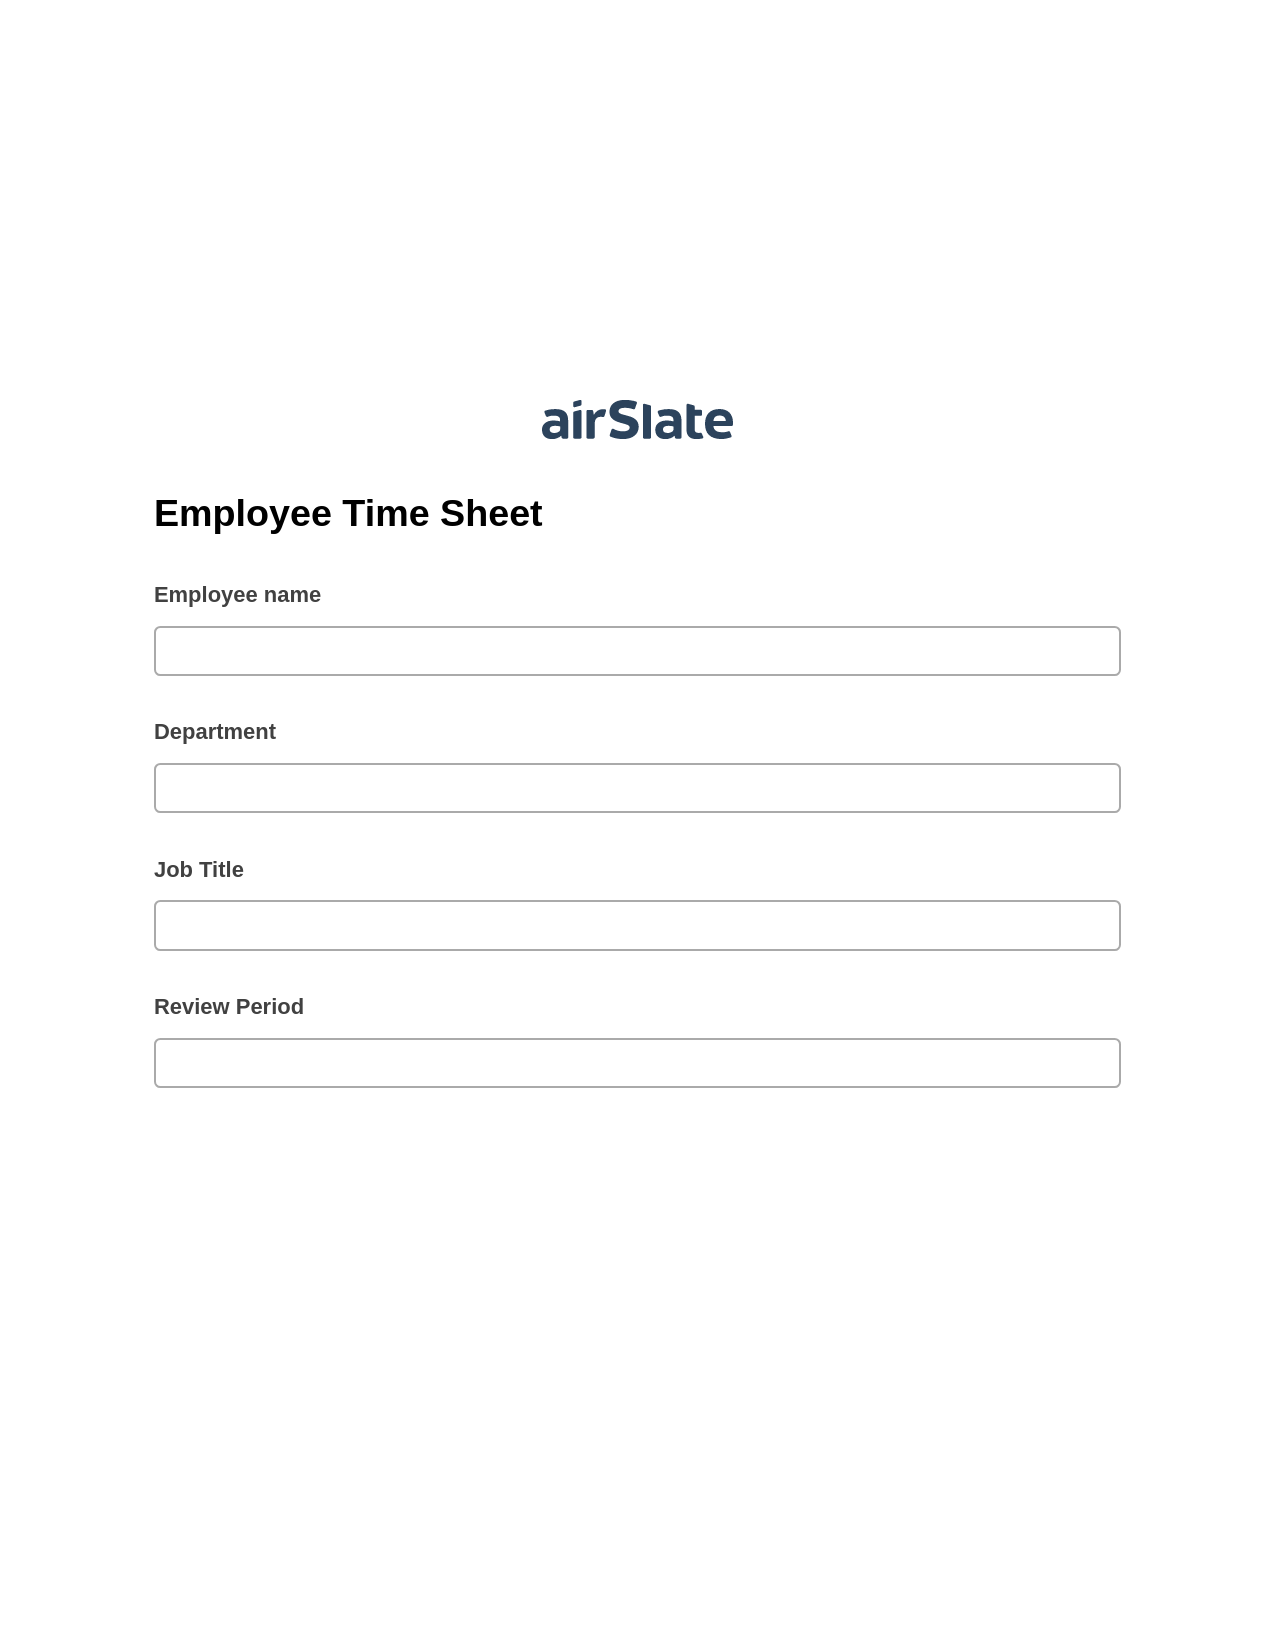 Employee Time Sheet Pre-fill from CSV File Bot, Custom Field's Value Bot, Slack Two-Way Binding Bot